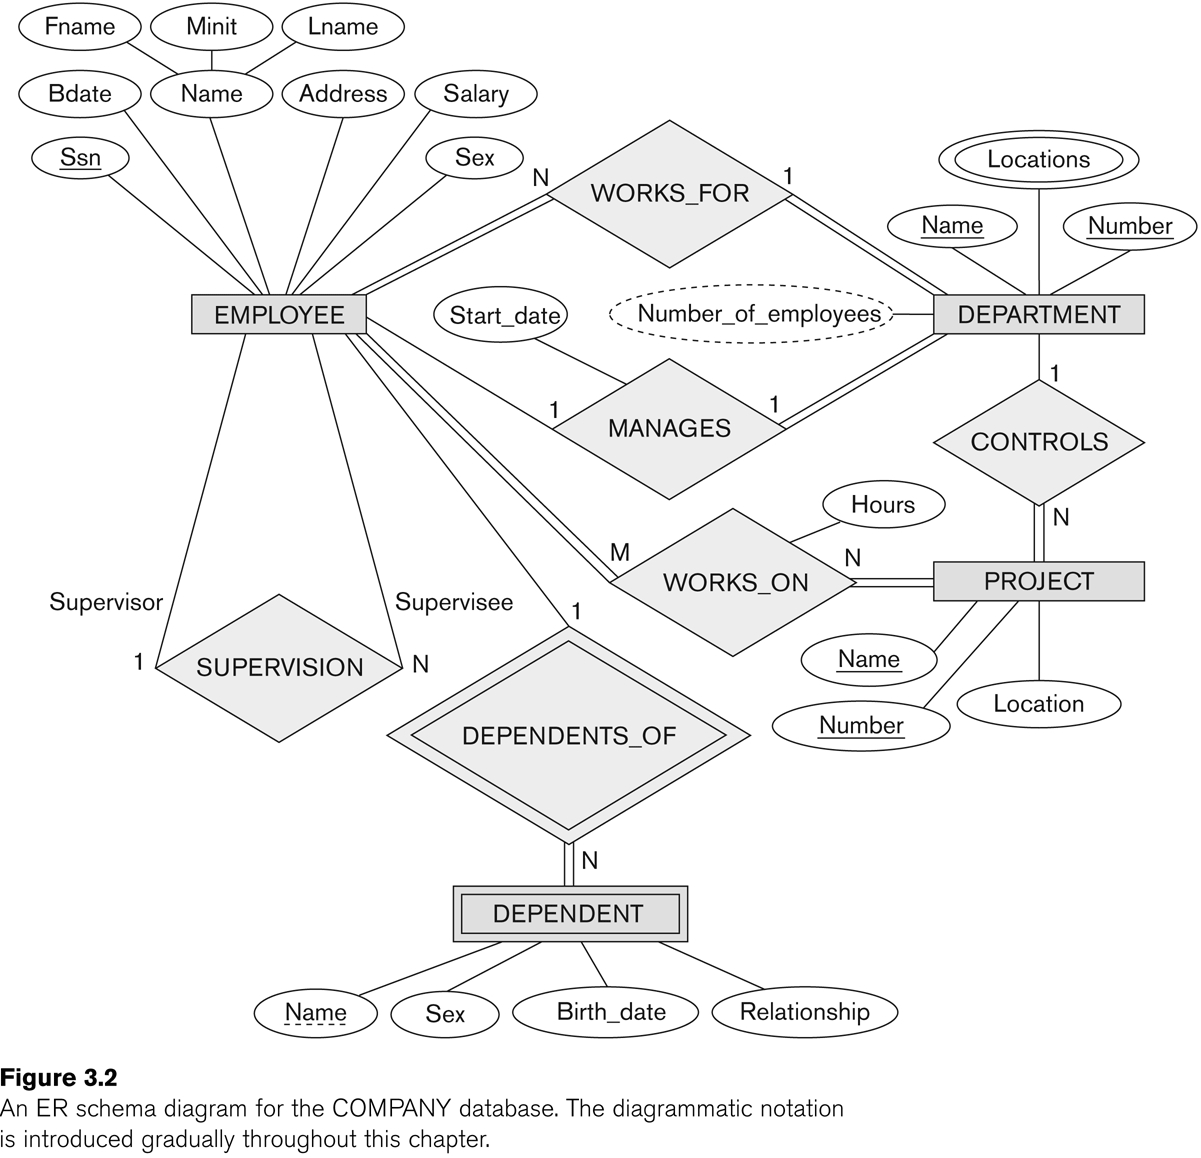 Entity-Relationship Modeling for Entity Relationship Diagram Primary Key